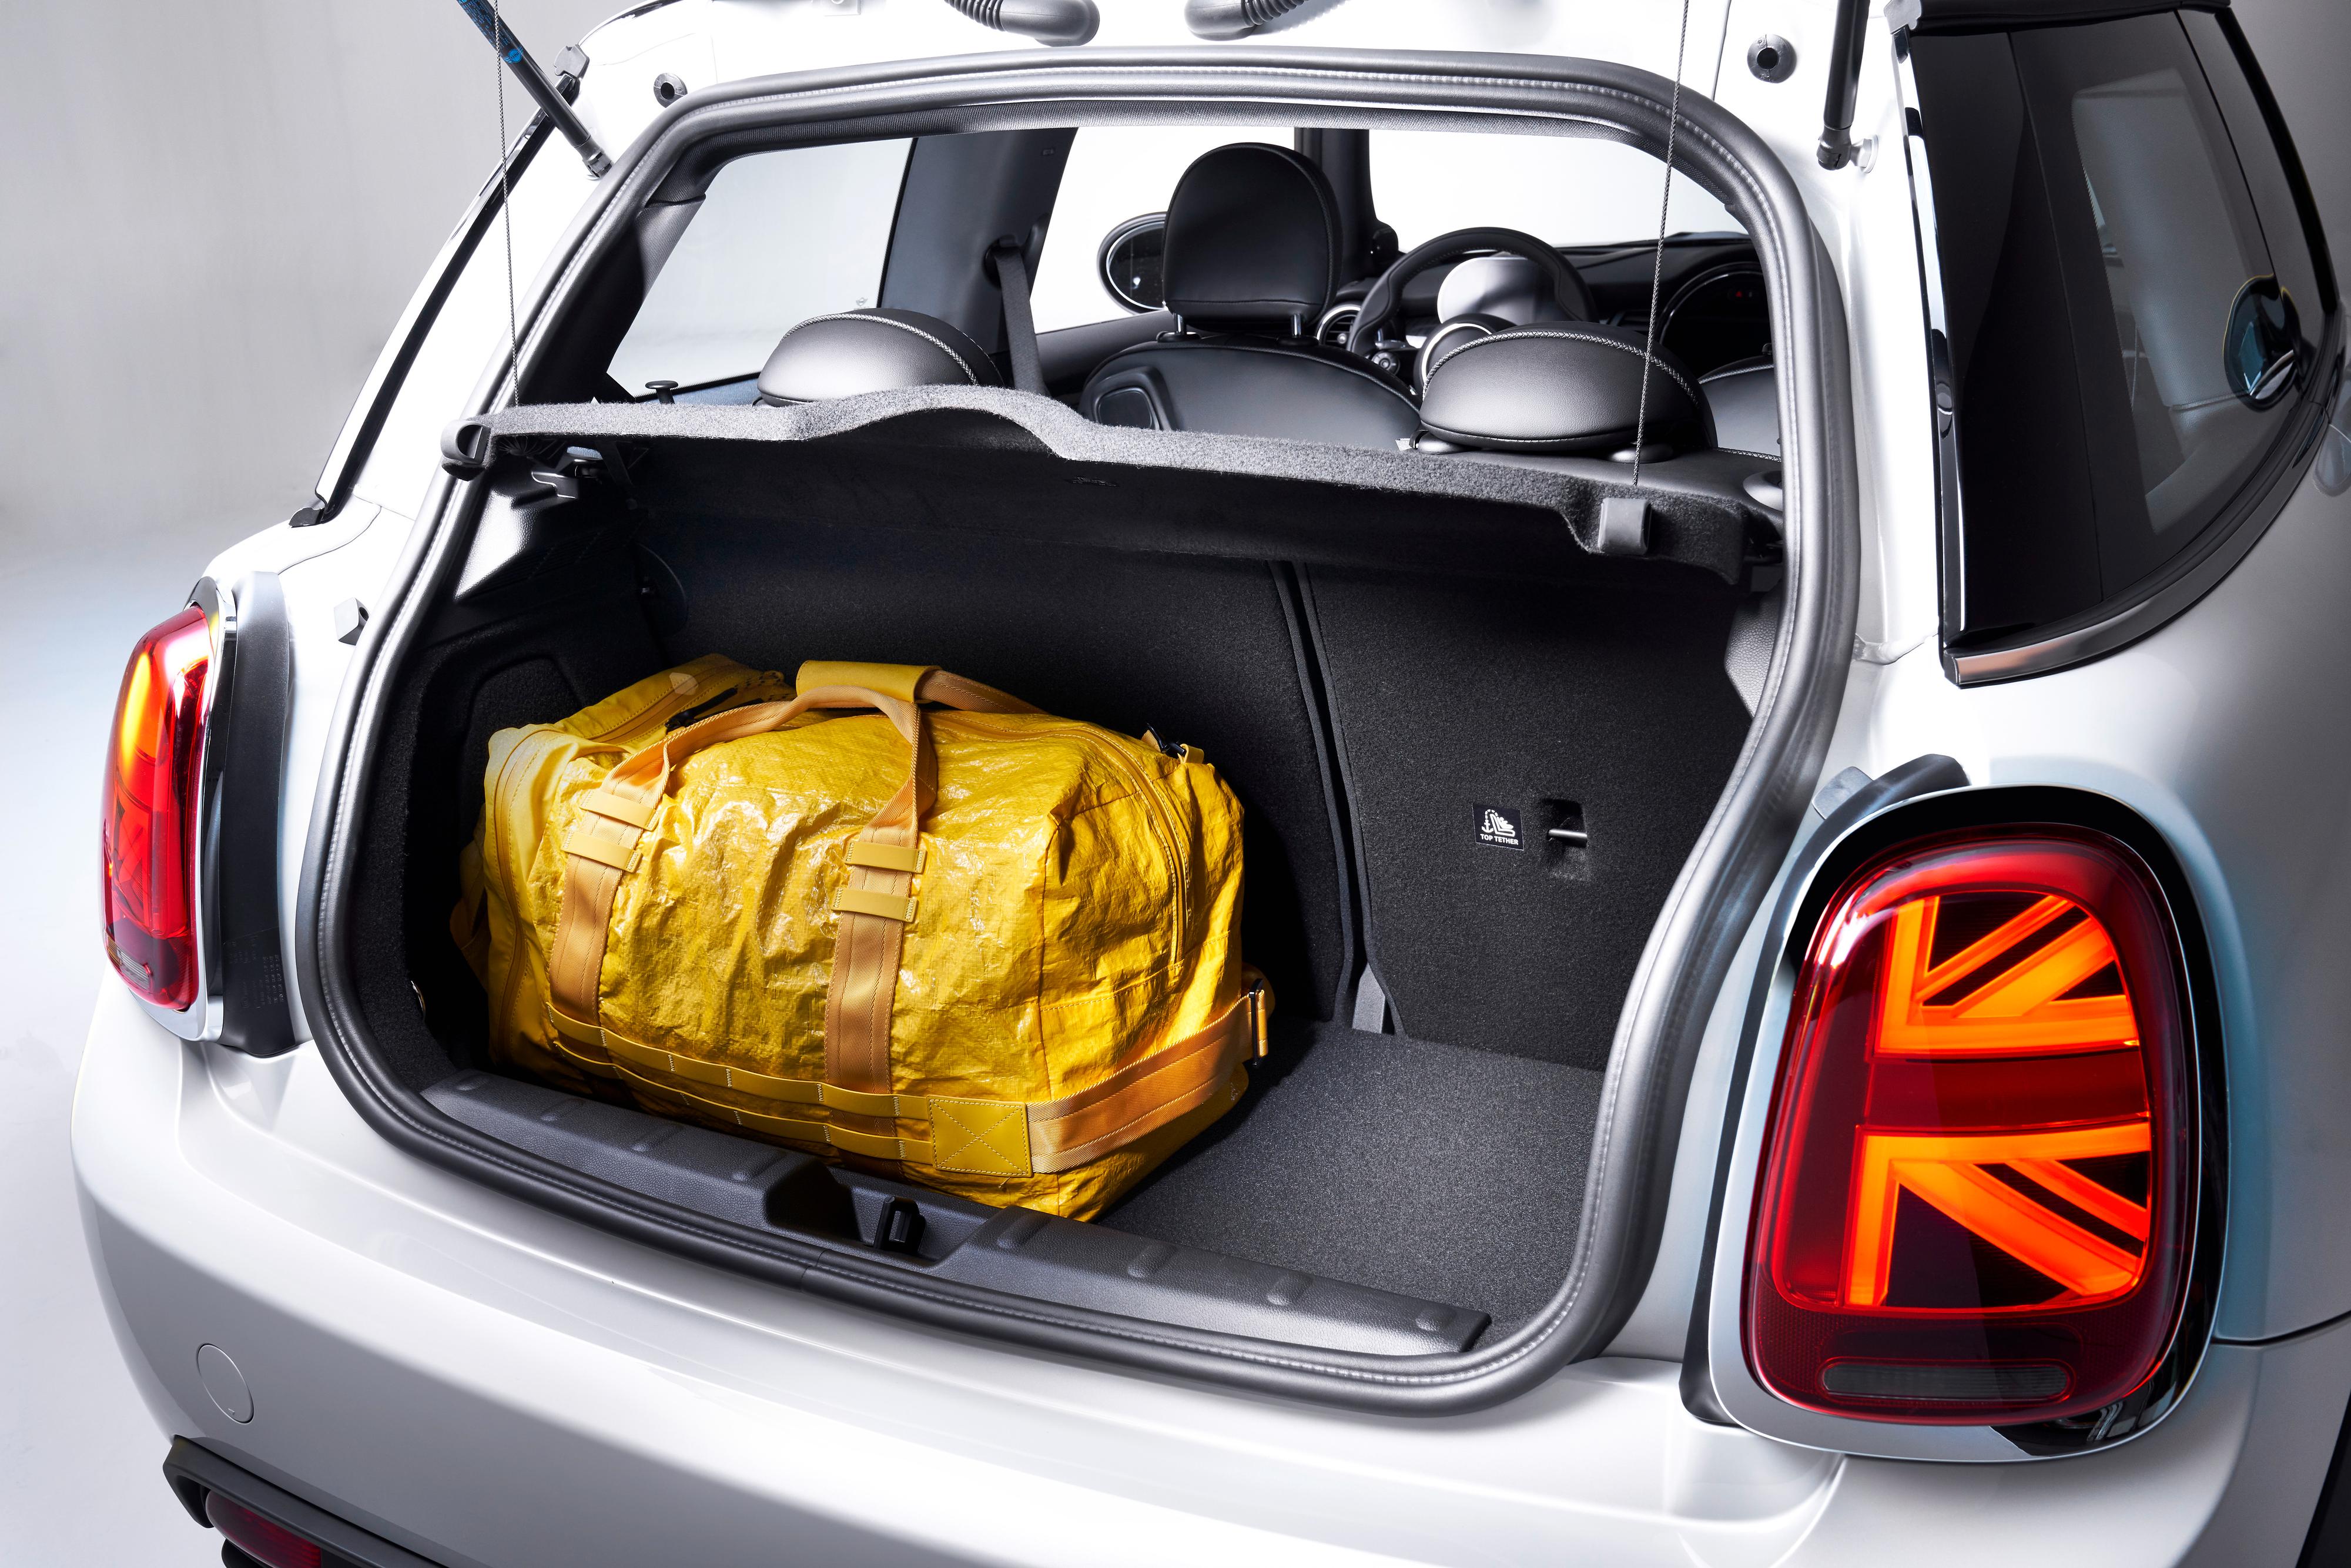 BMW oppgir 211 liter bagasjeplass.